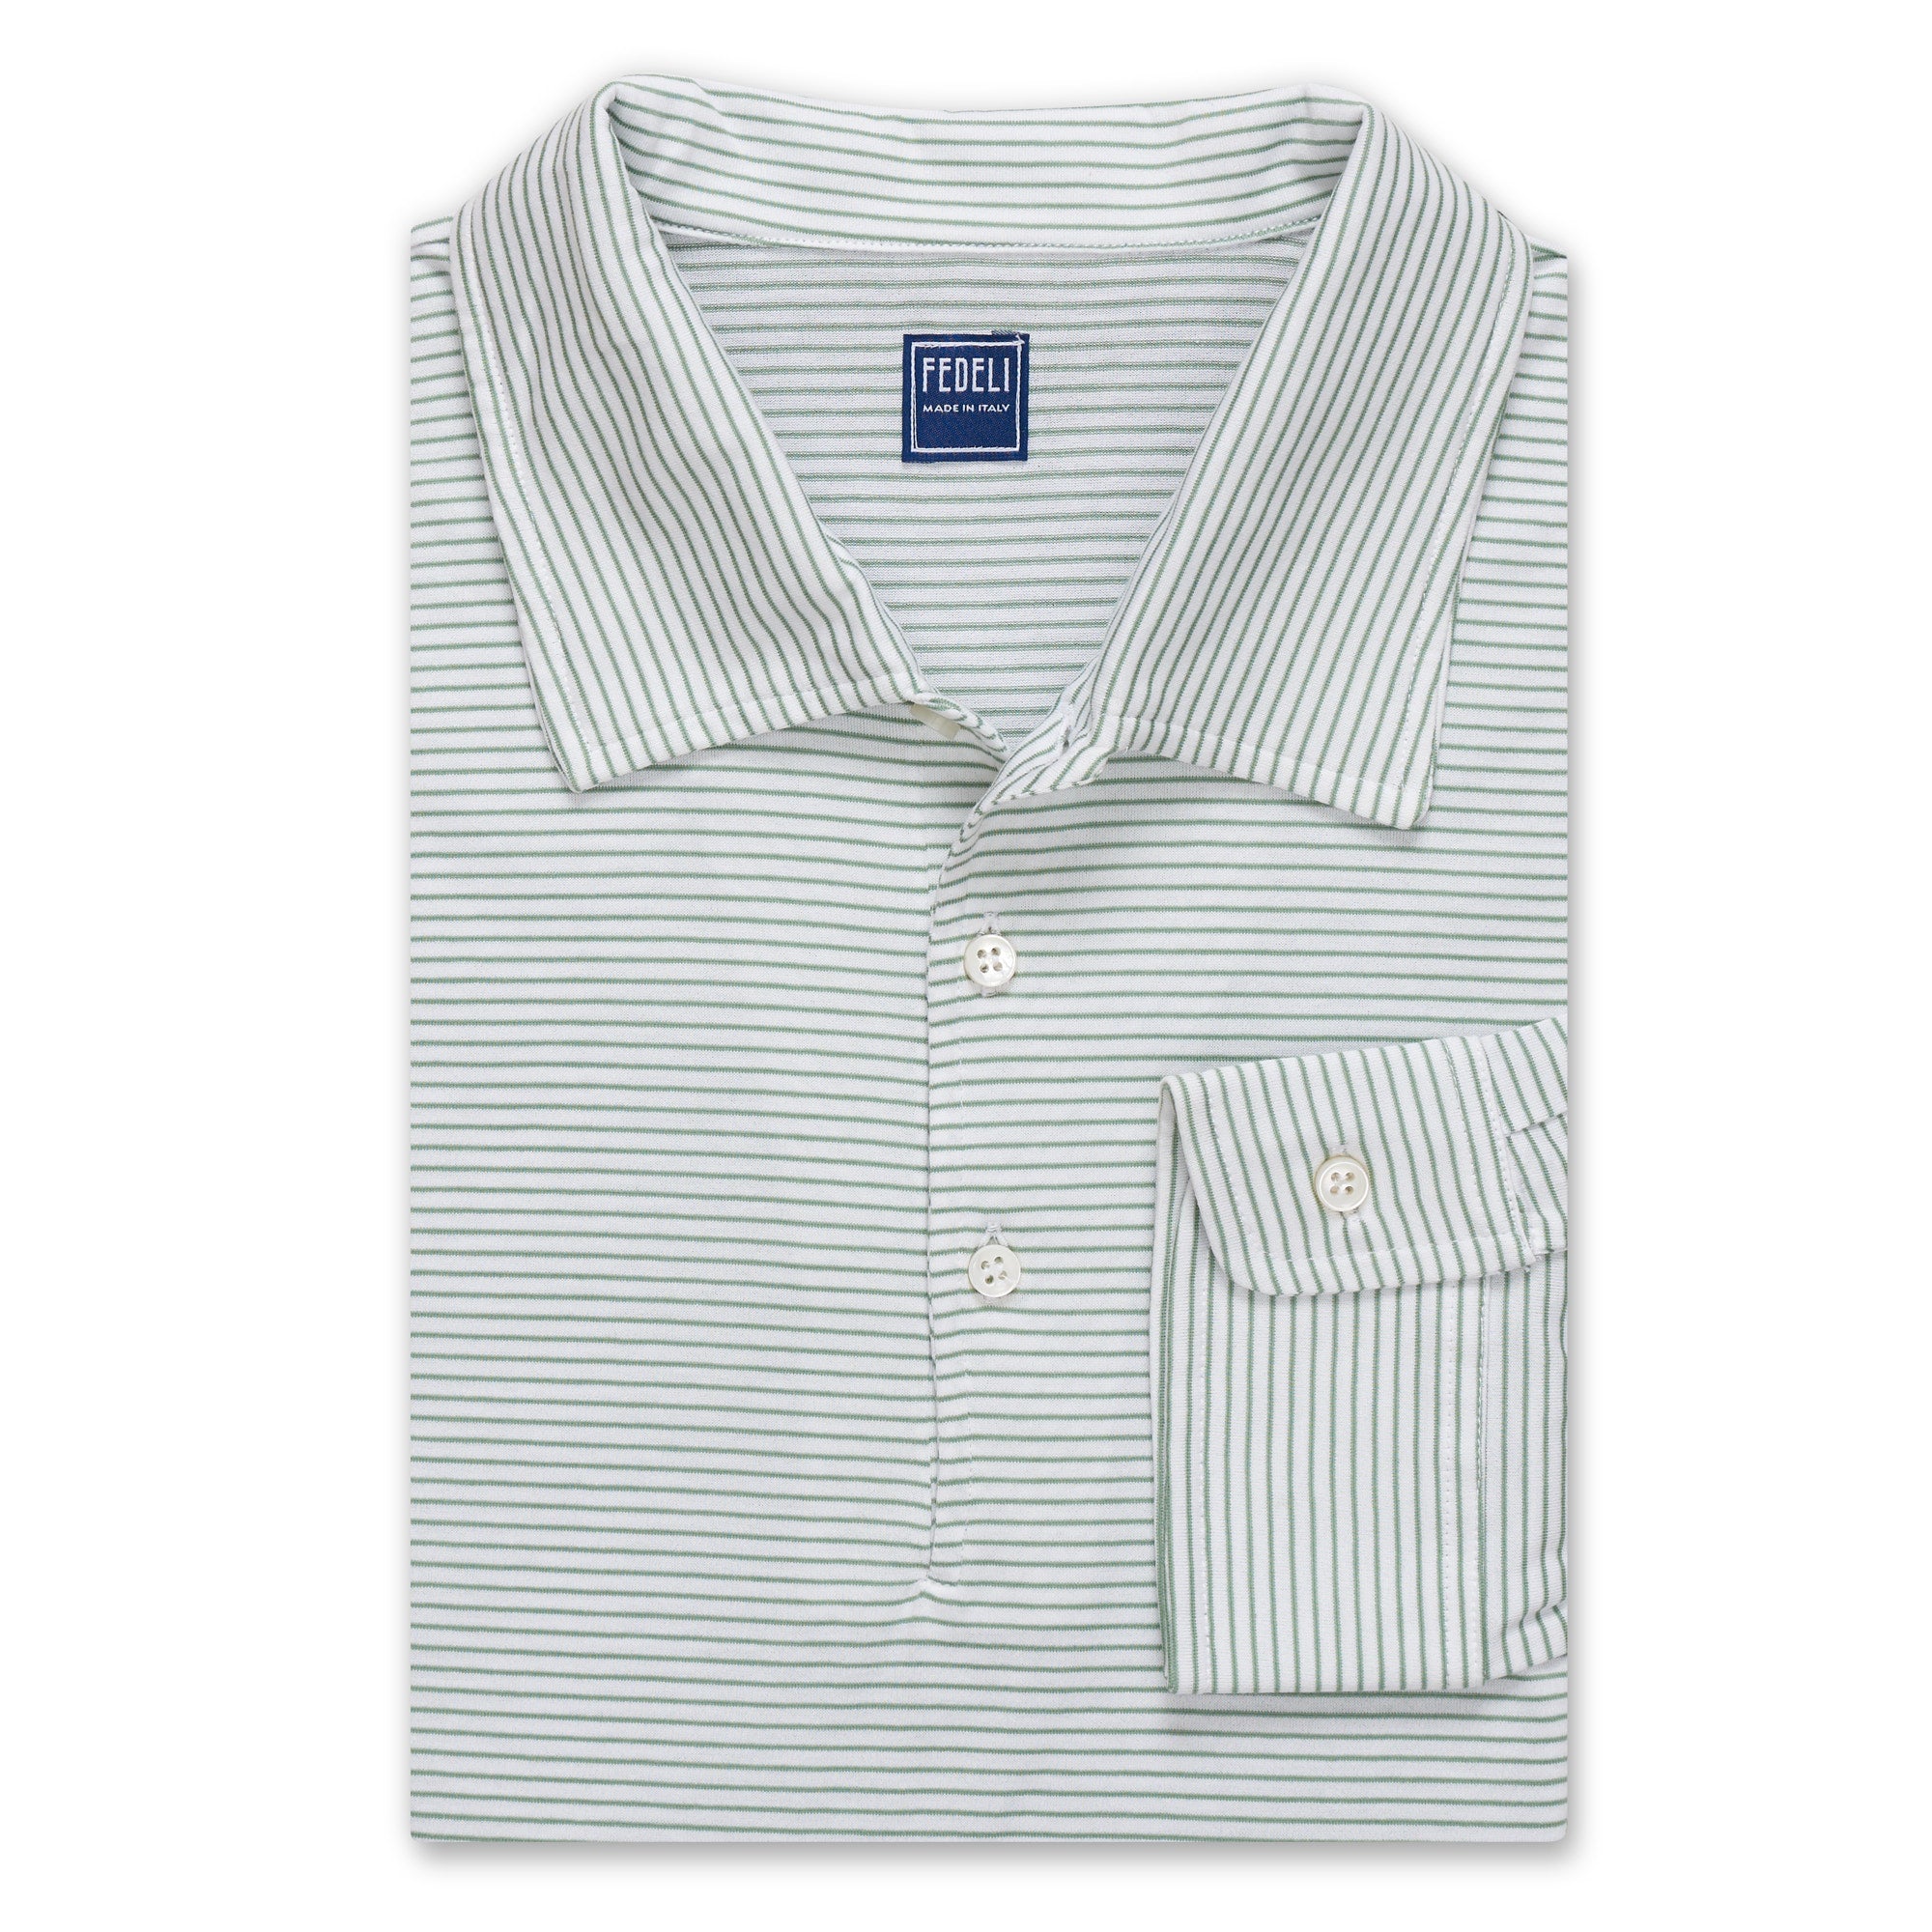 FEDELI "Libeccio" Green Striped Cotton Jersey Long Sleeve Polo Shirt EU 60 NEW US 4XL FEDELI